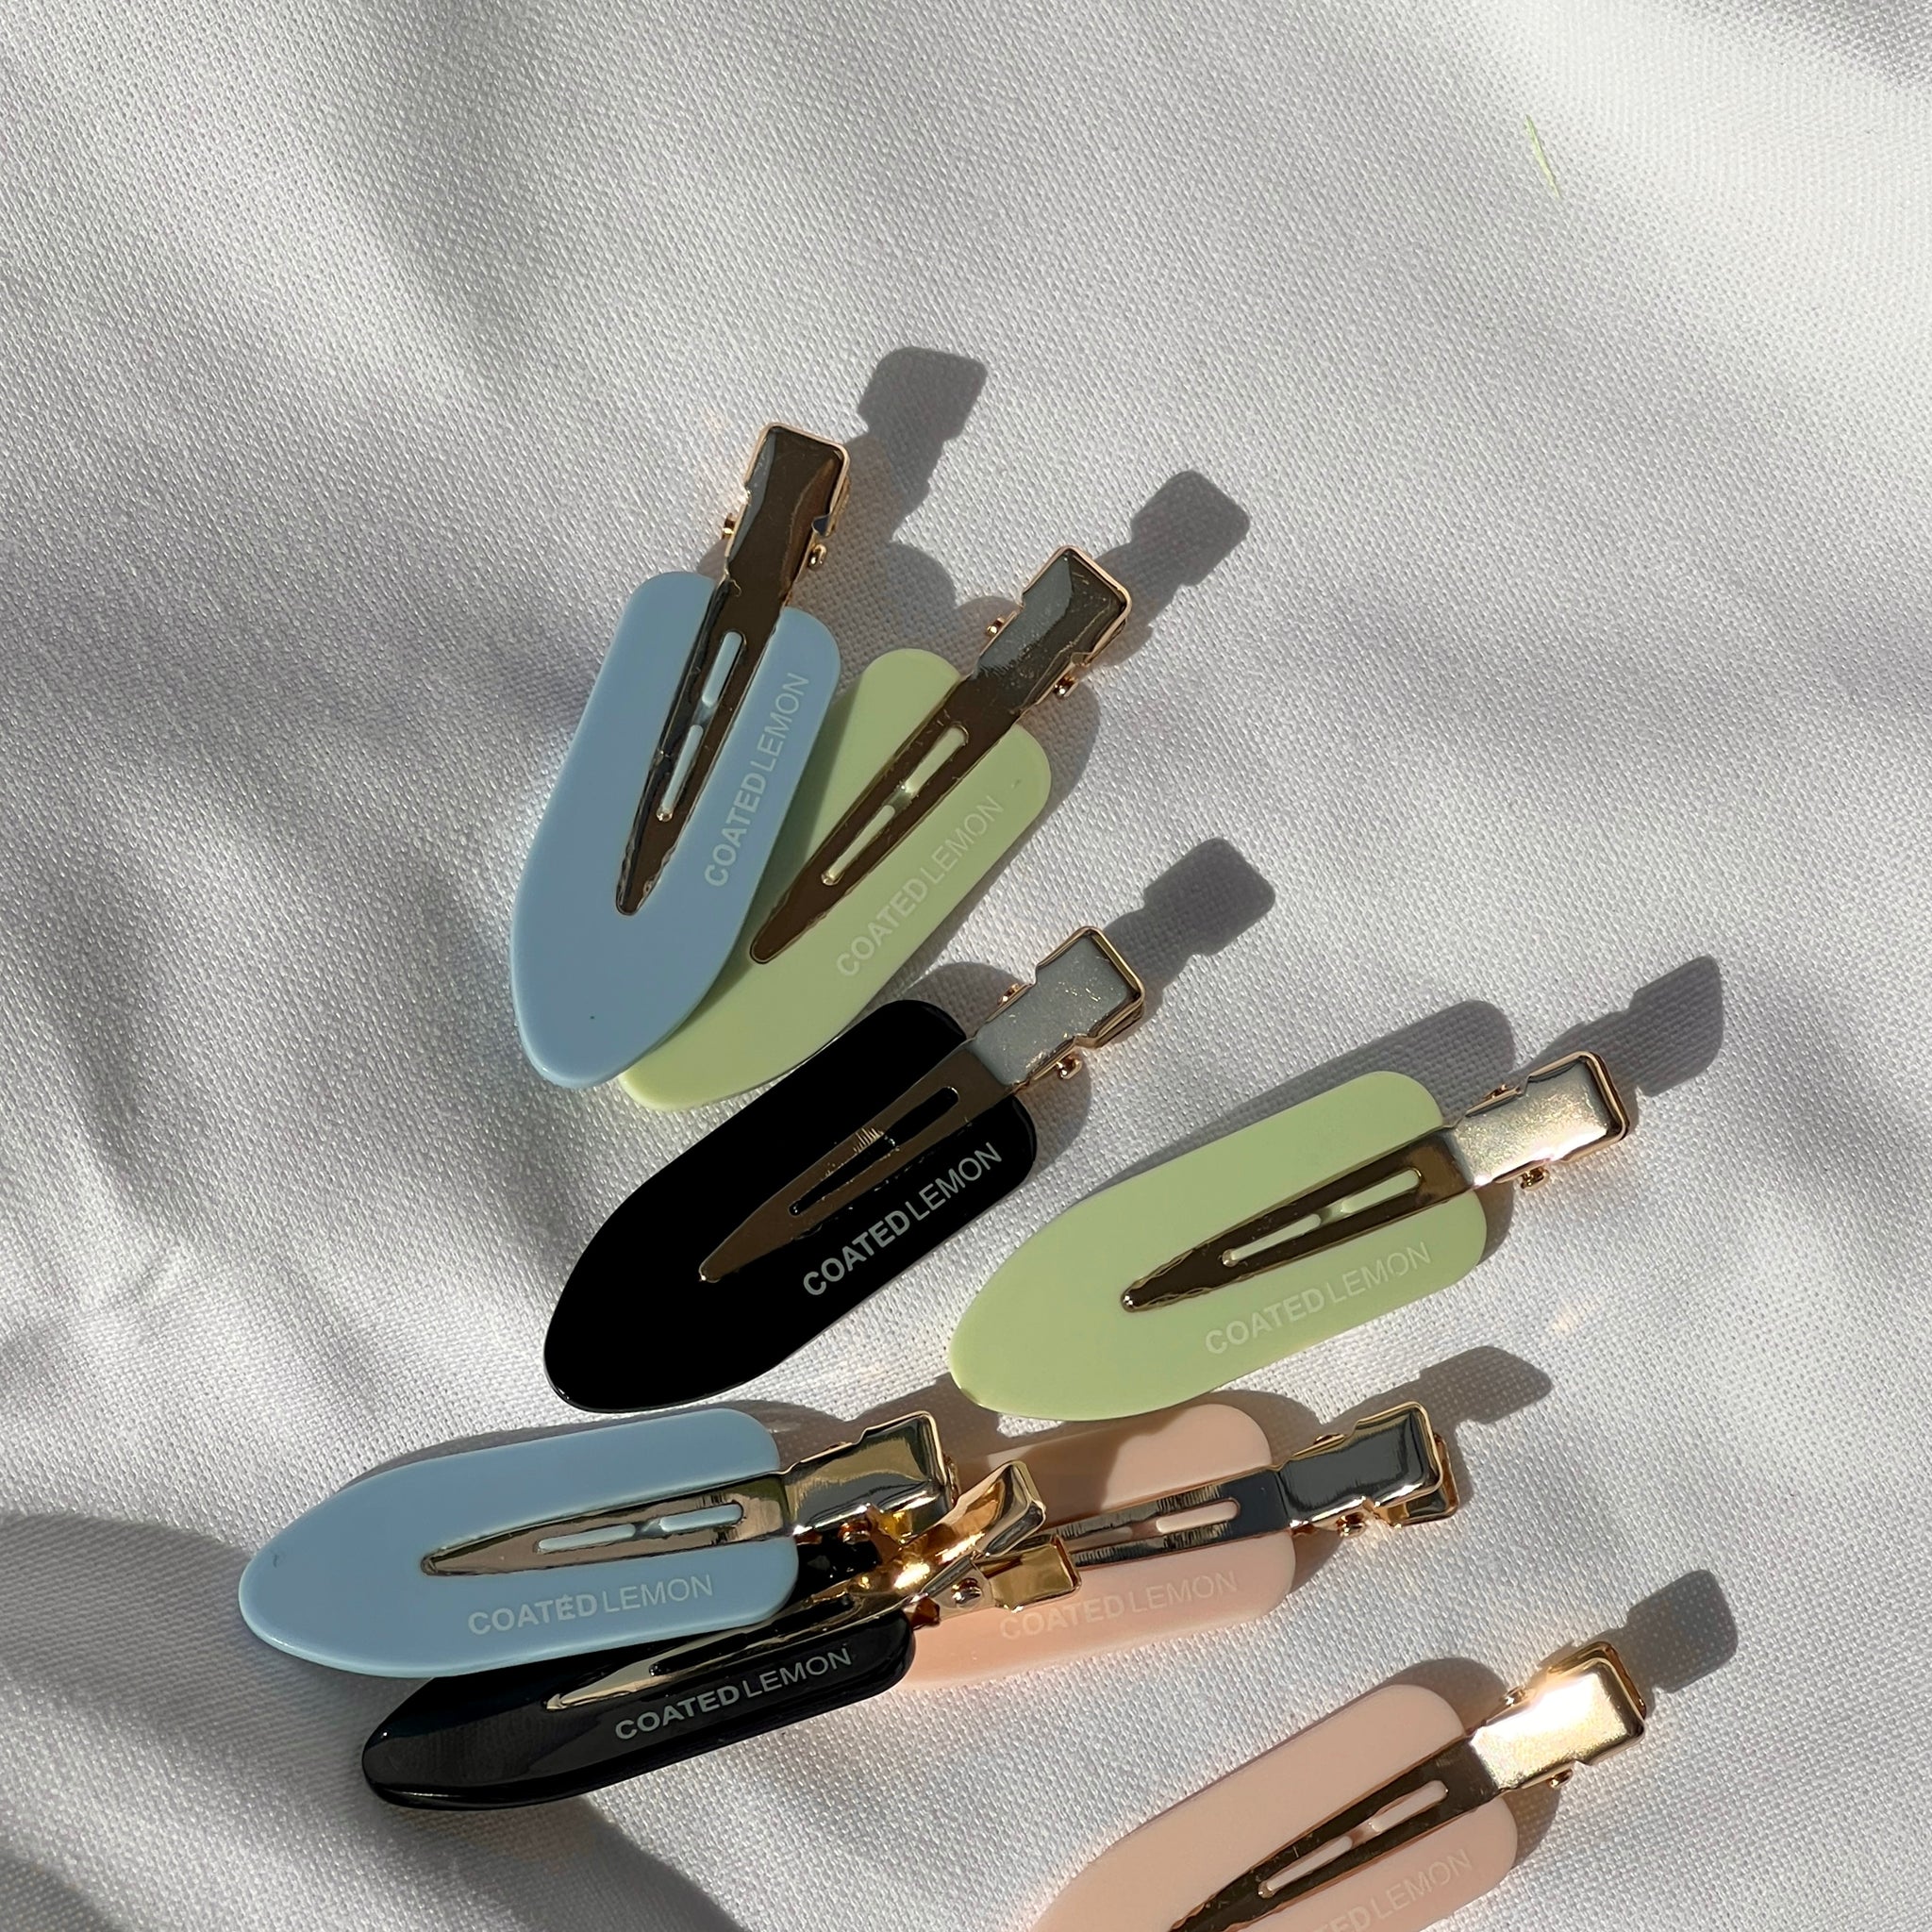 blossom hair clips (4pk)